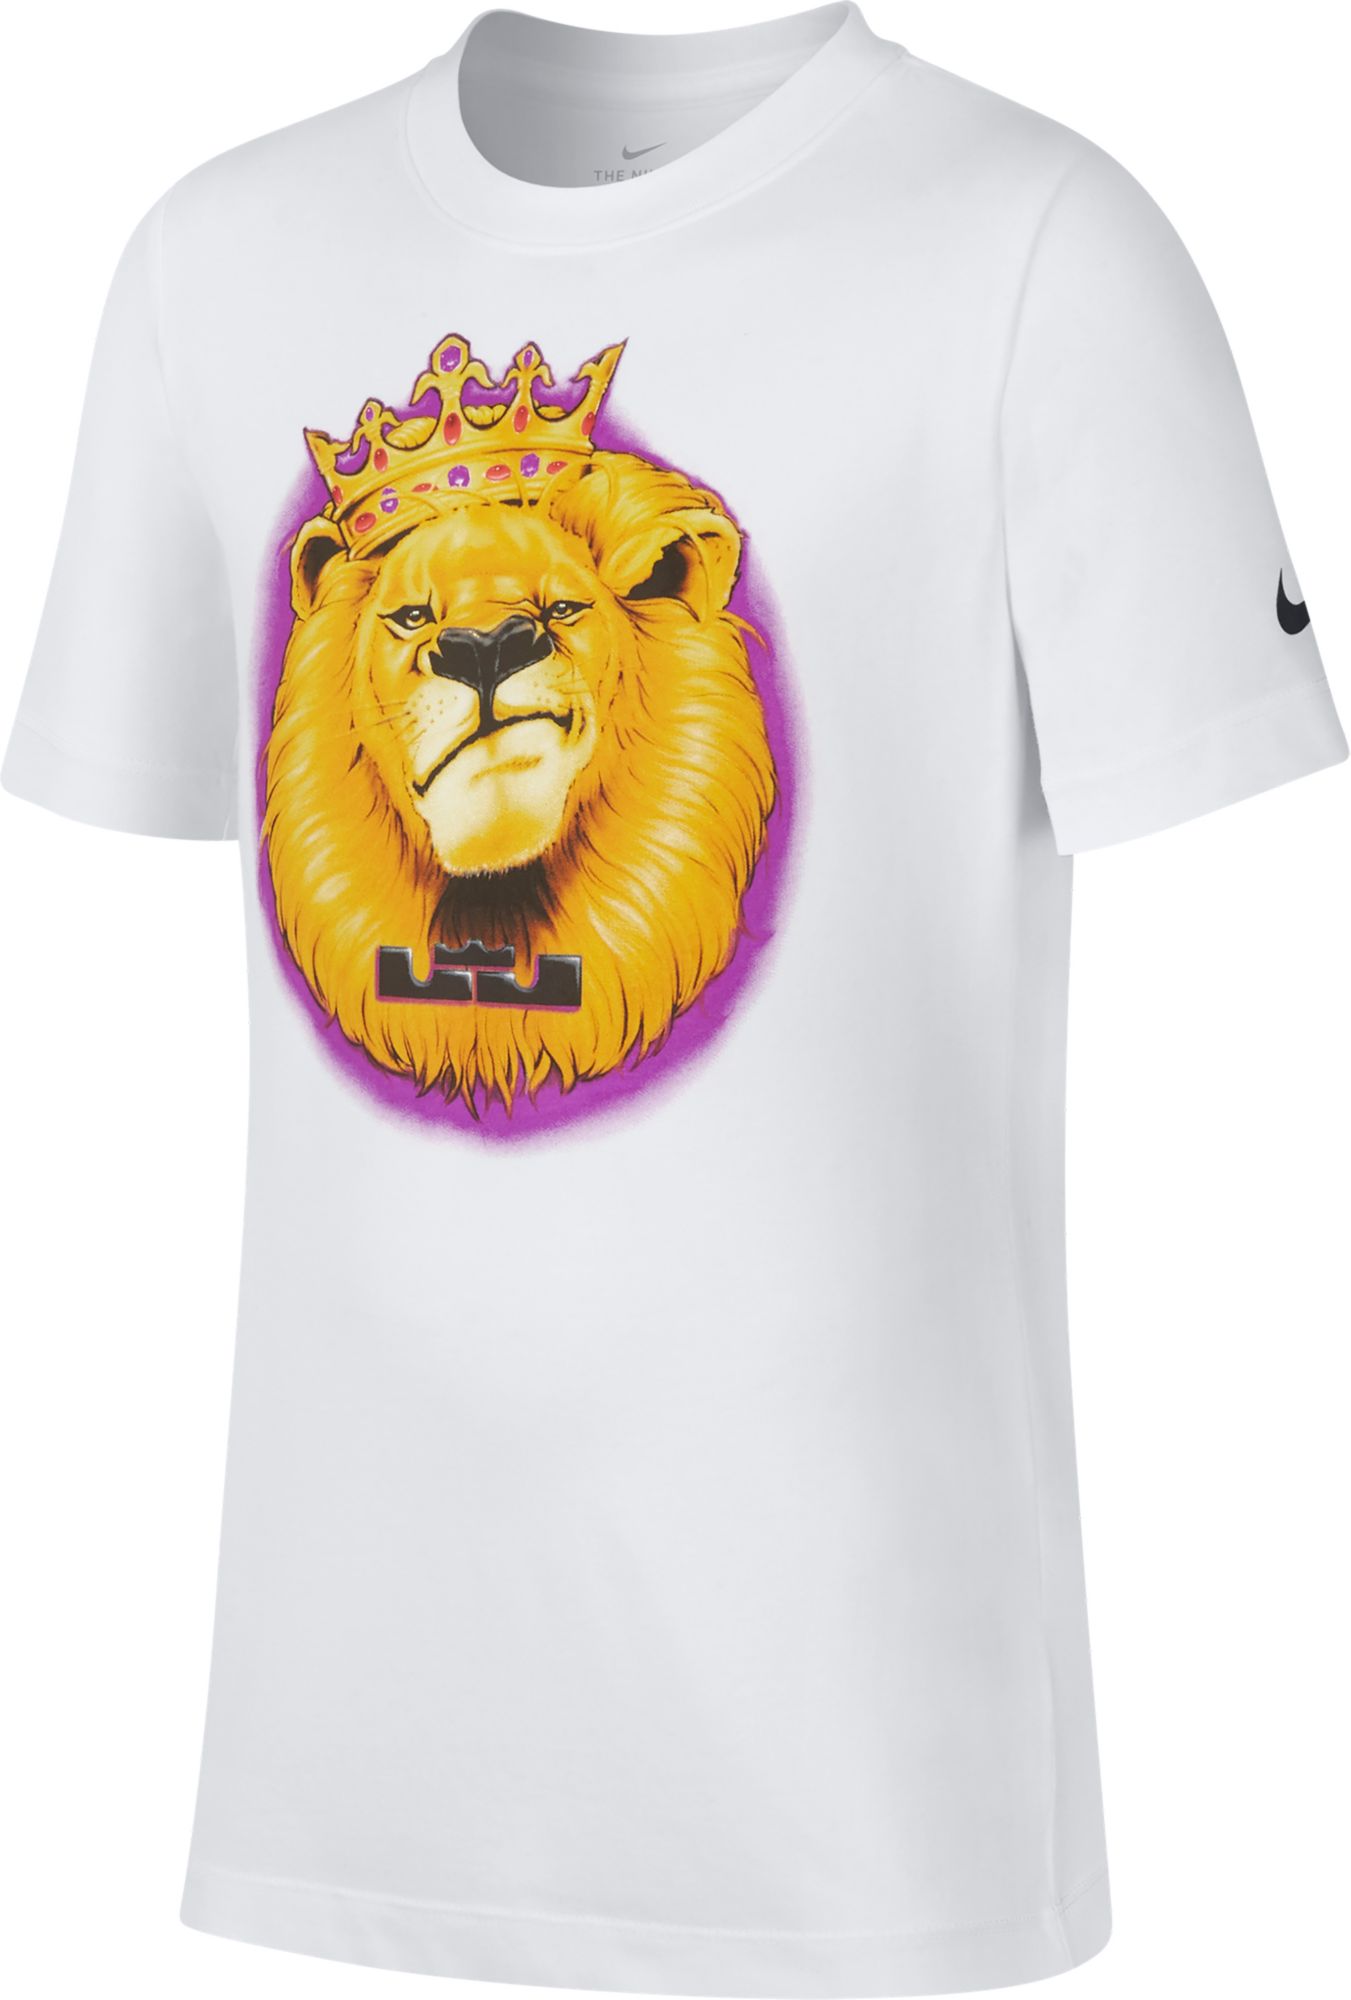 lebron james lion shirt